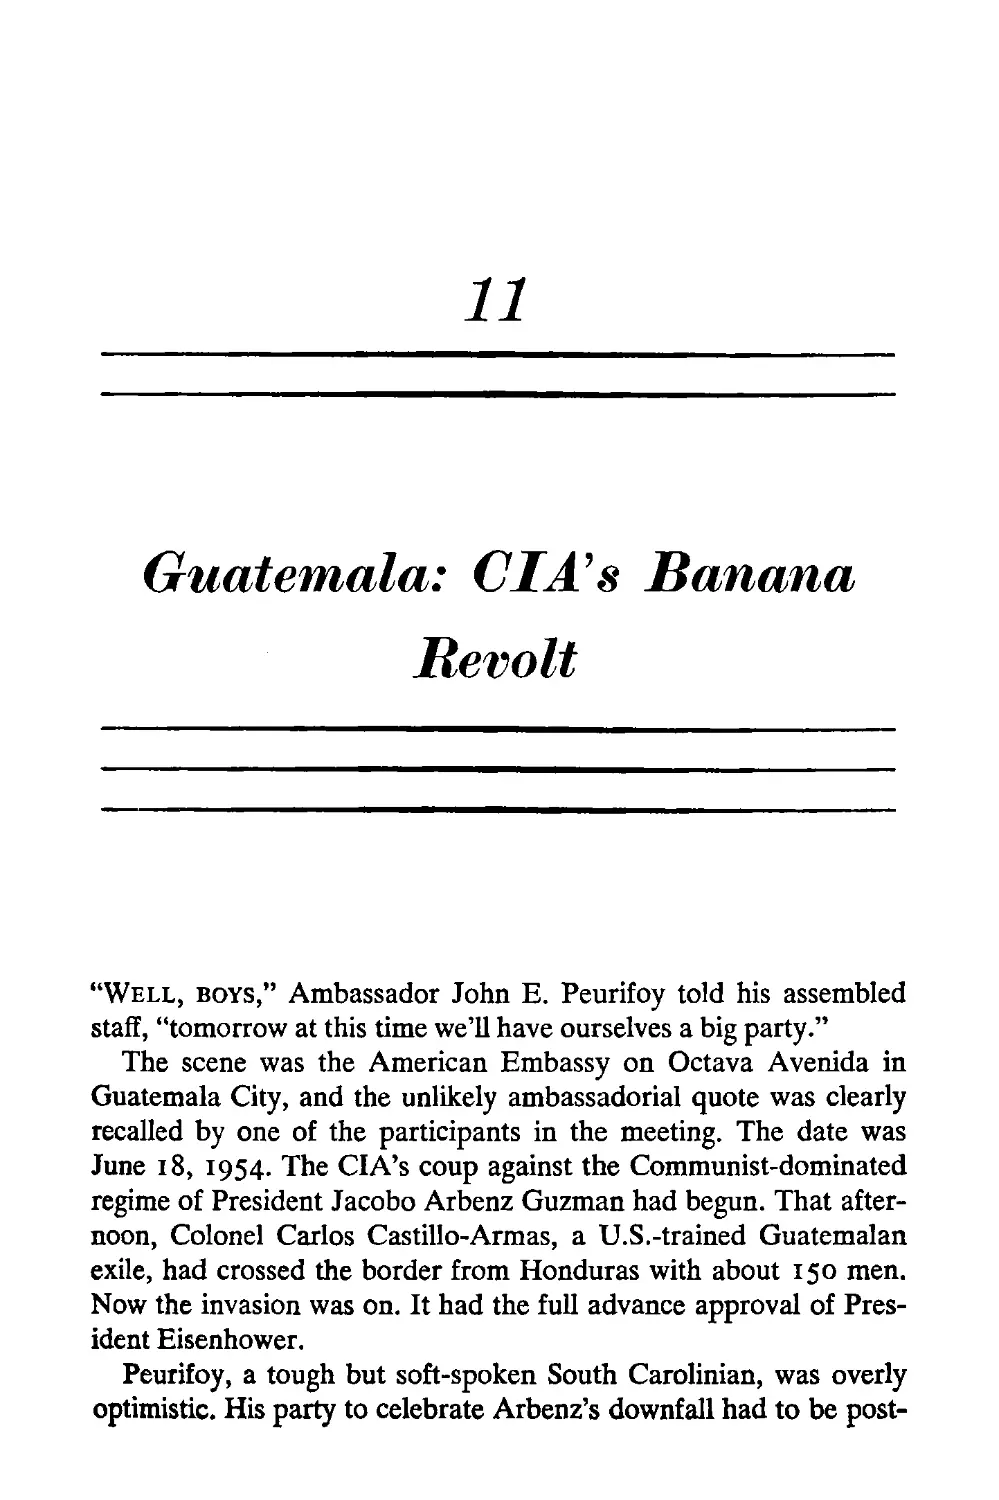 11. Guatemala: CIA’s Banana Revolt